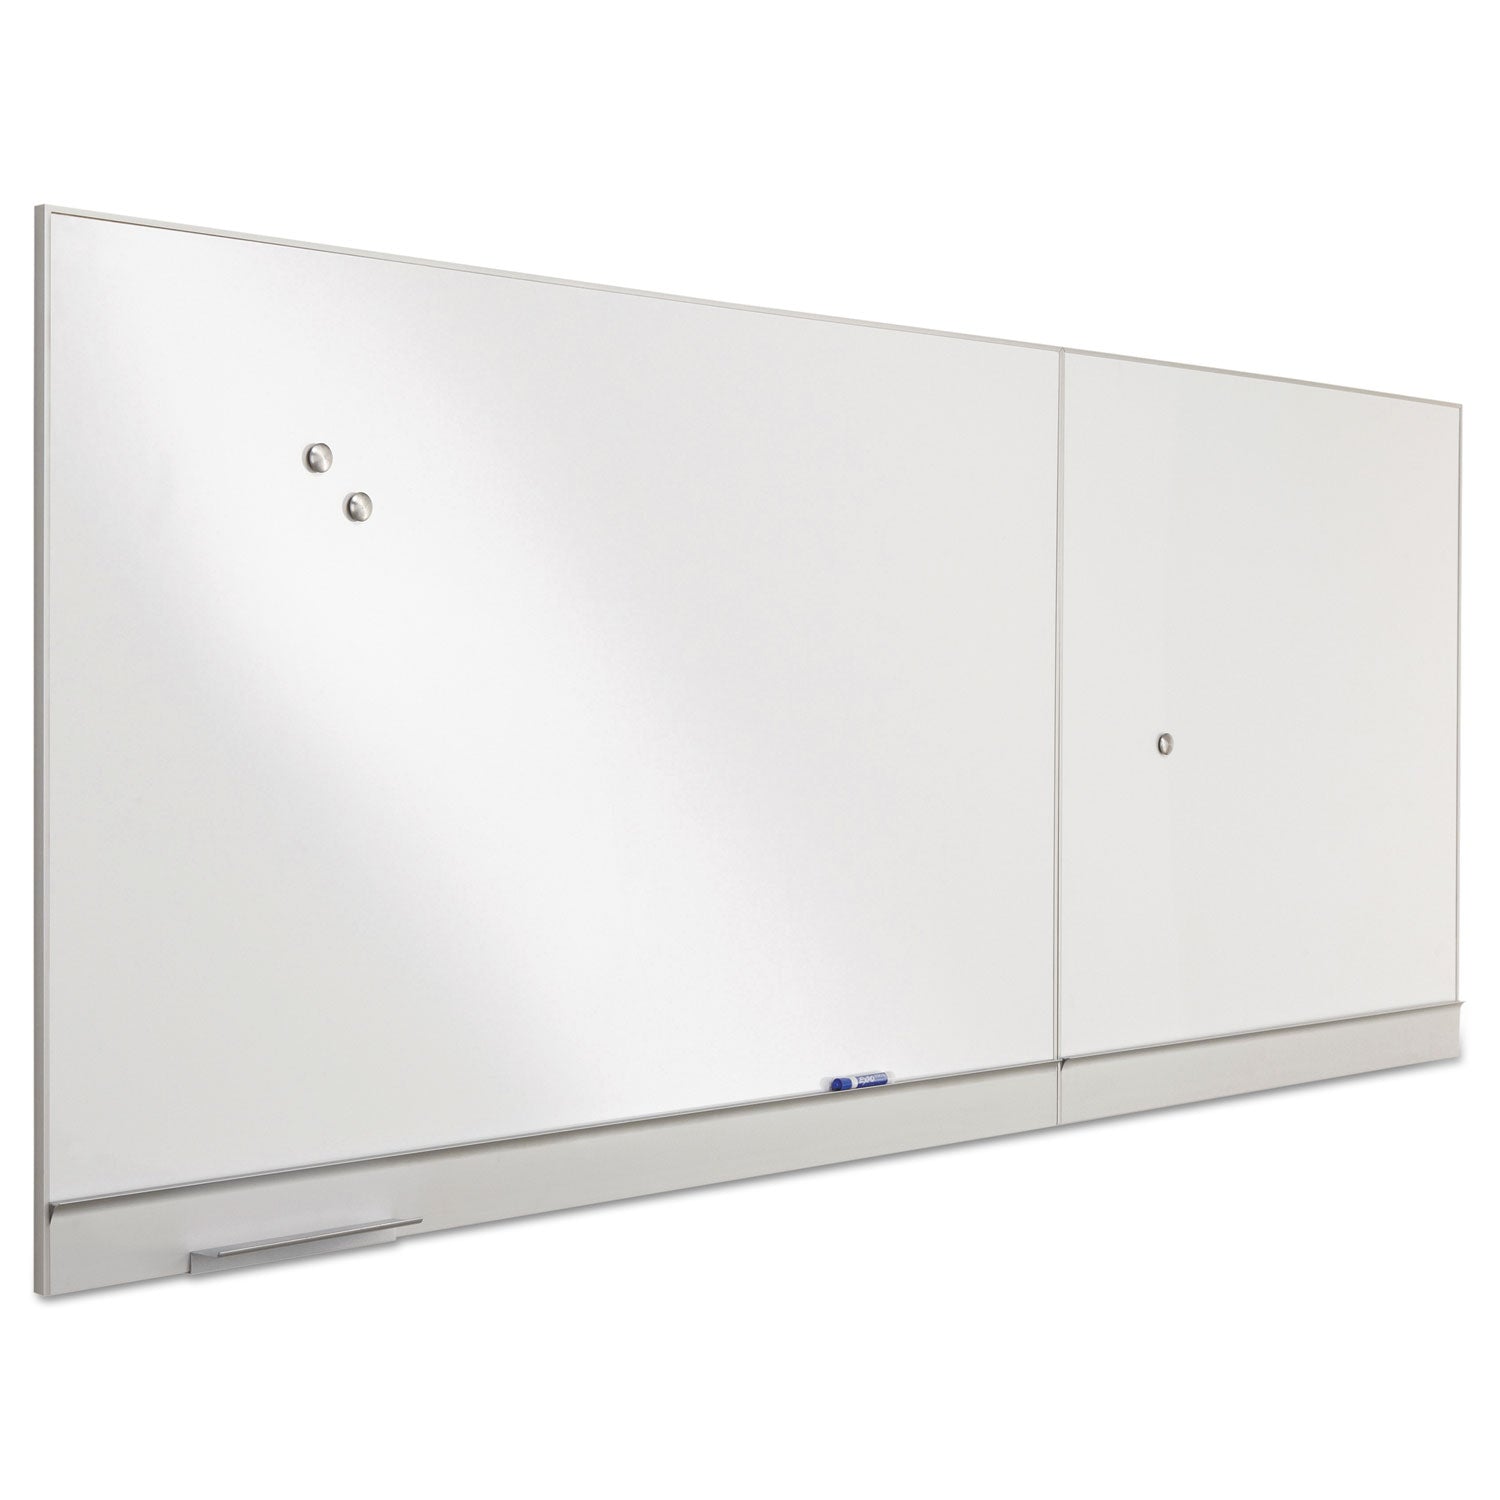 Polarity Magnetic Dry Erase White Board, 48 x 32, White Surface, Silver Aluminum Frame - 